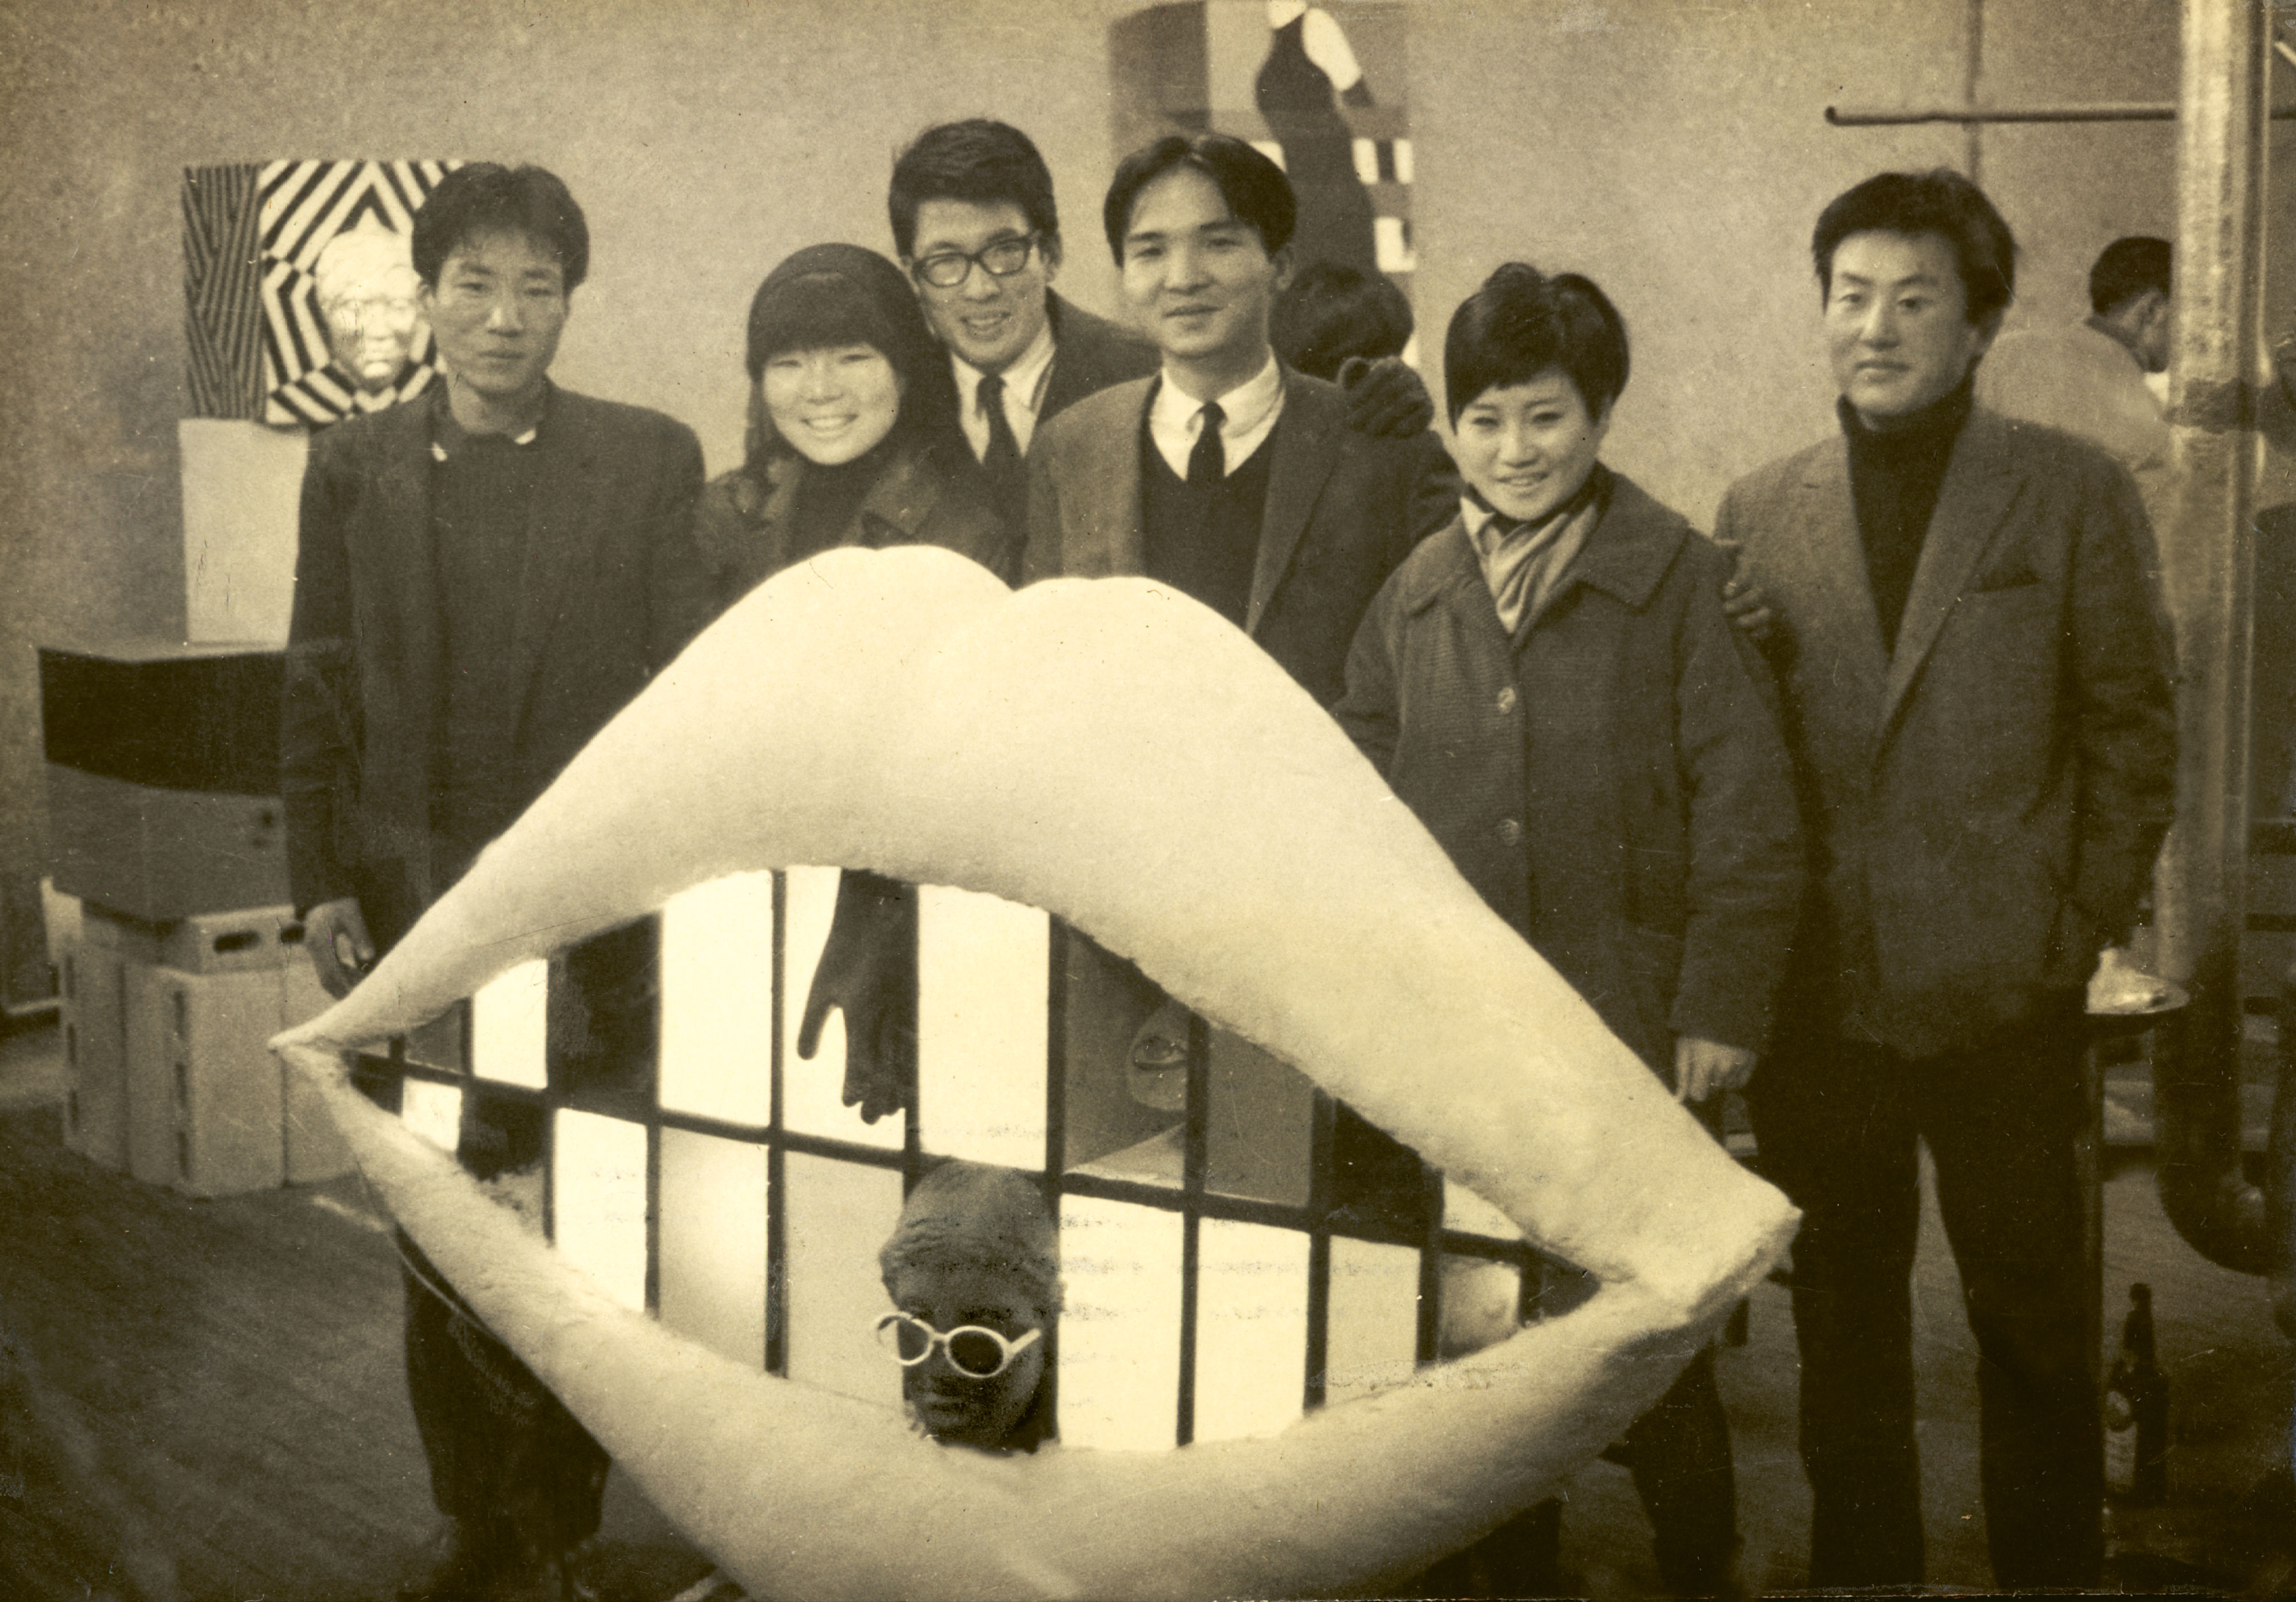 Artists of the Shinjeon Group – Kang Kuk-jin, Jung Kang-ja, Chung Chan-seung, Kim In-hwan, Shim Sun-hee, Yang Duk-soo – standing by Jung’s work Kiss me (1967), at the ‘Union Exhibition of Korean Young Artists’, Korea Information Center, Seoul, 1967